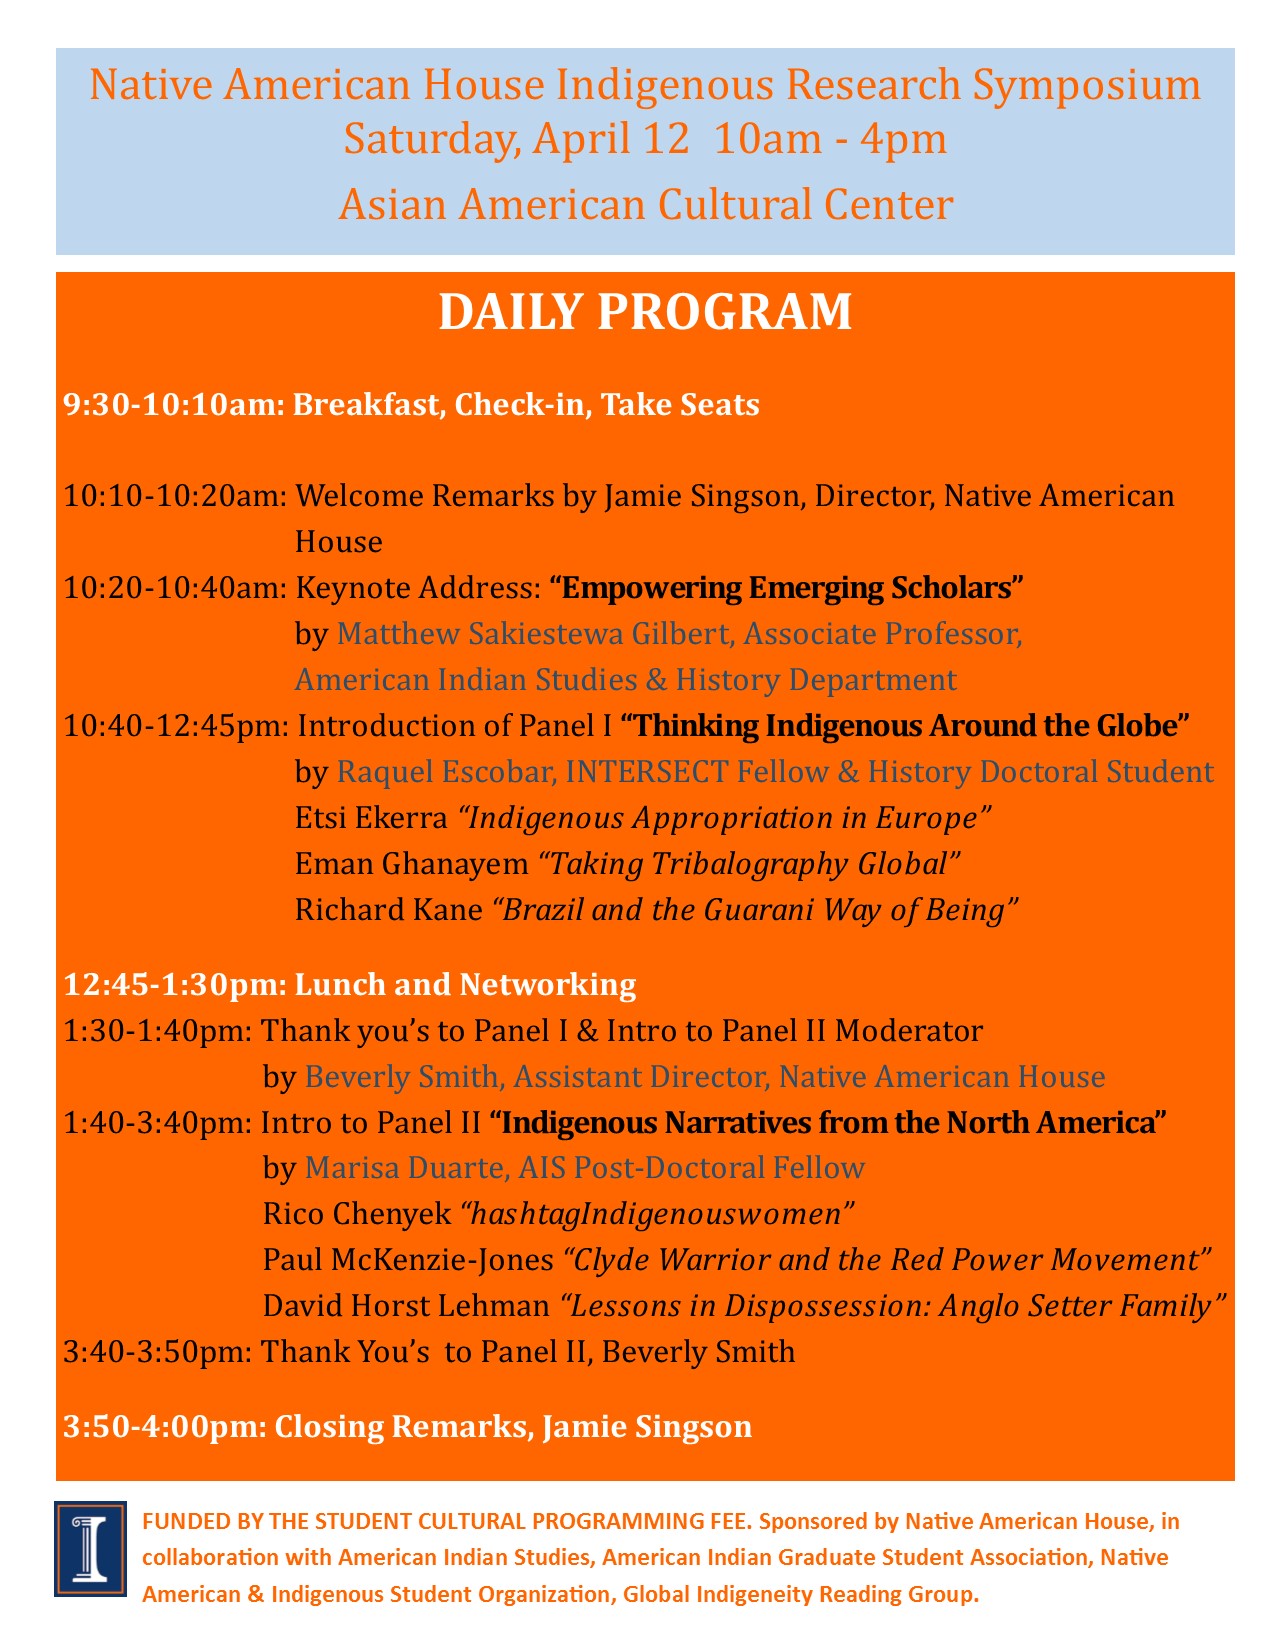 Native America House Indigenous Research Symposium Program